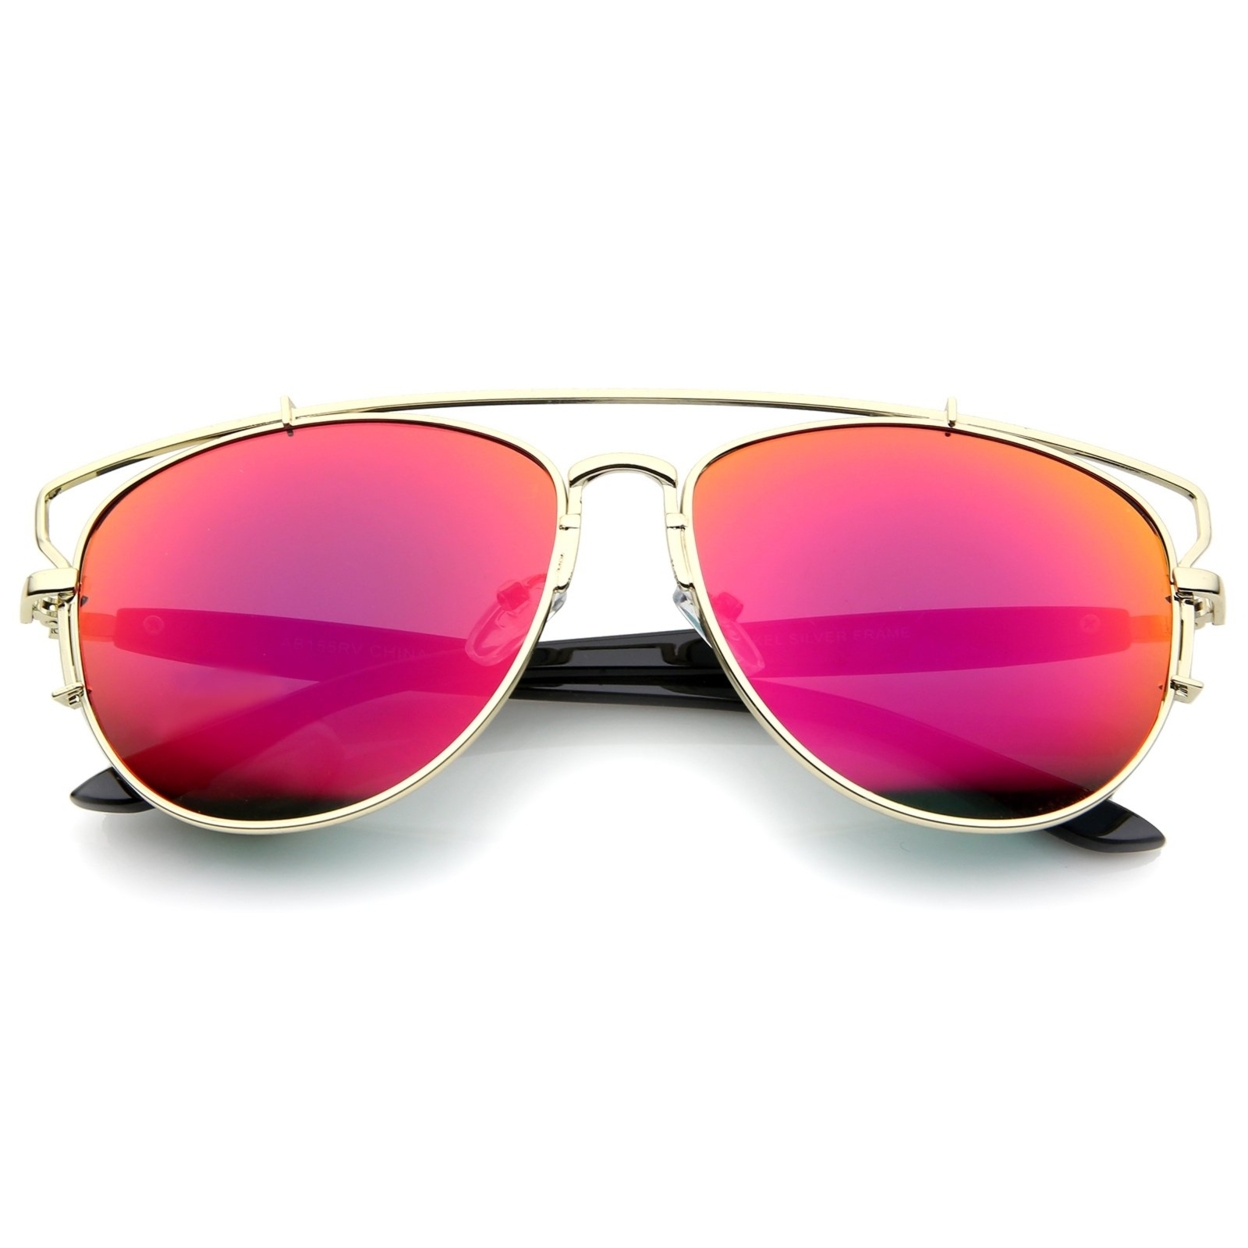 Modern Full Metal Crossbar Open Design Colored Mirror Aviator Sunglasses 58mm - Silver / Silver Mirror